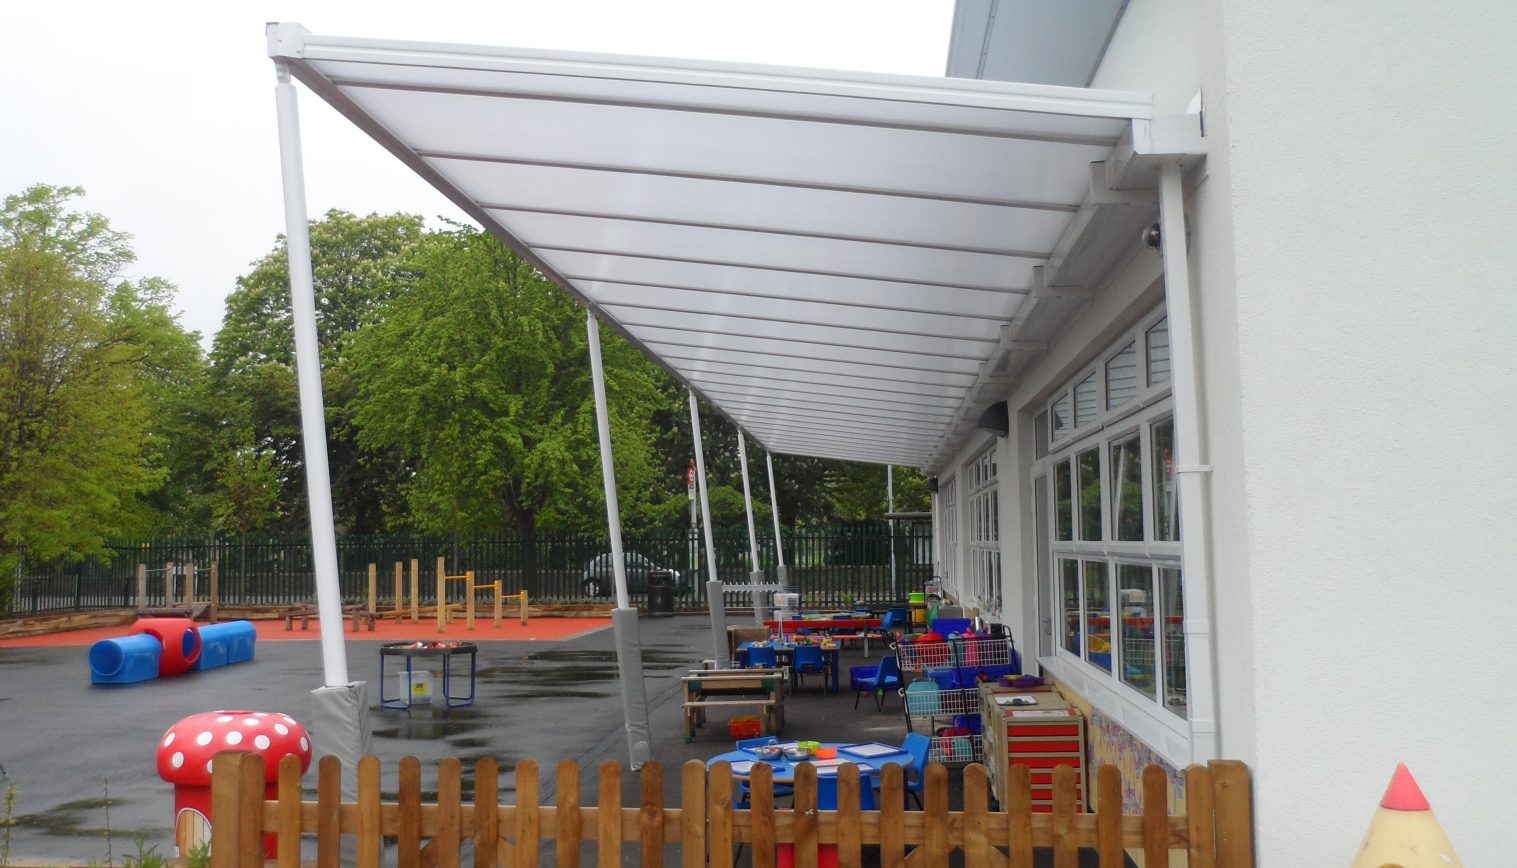 Gordonbrock Primary School – Wall Mounted Canopy